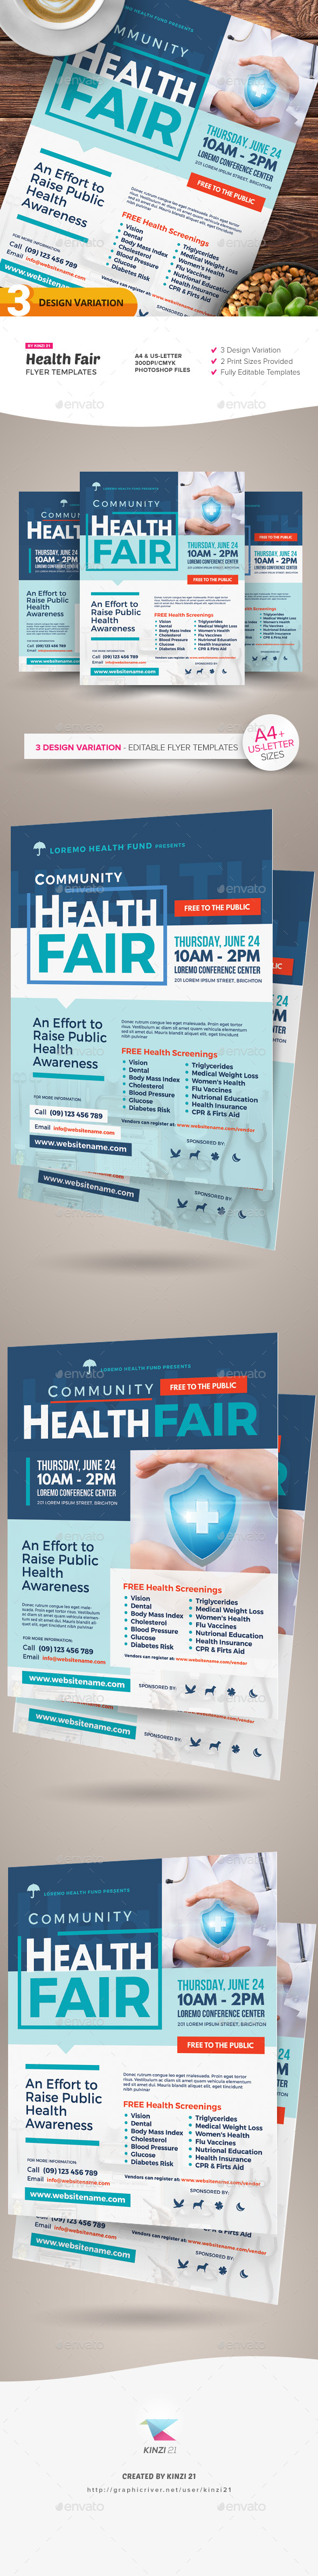 Health Fair Flyer Templates Intended For Health Fair Flyer Templates Free